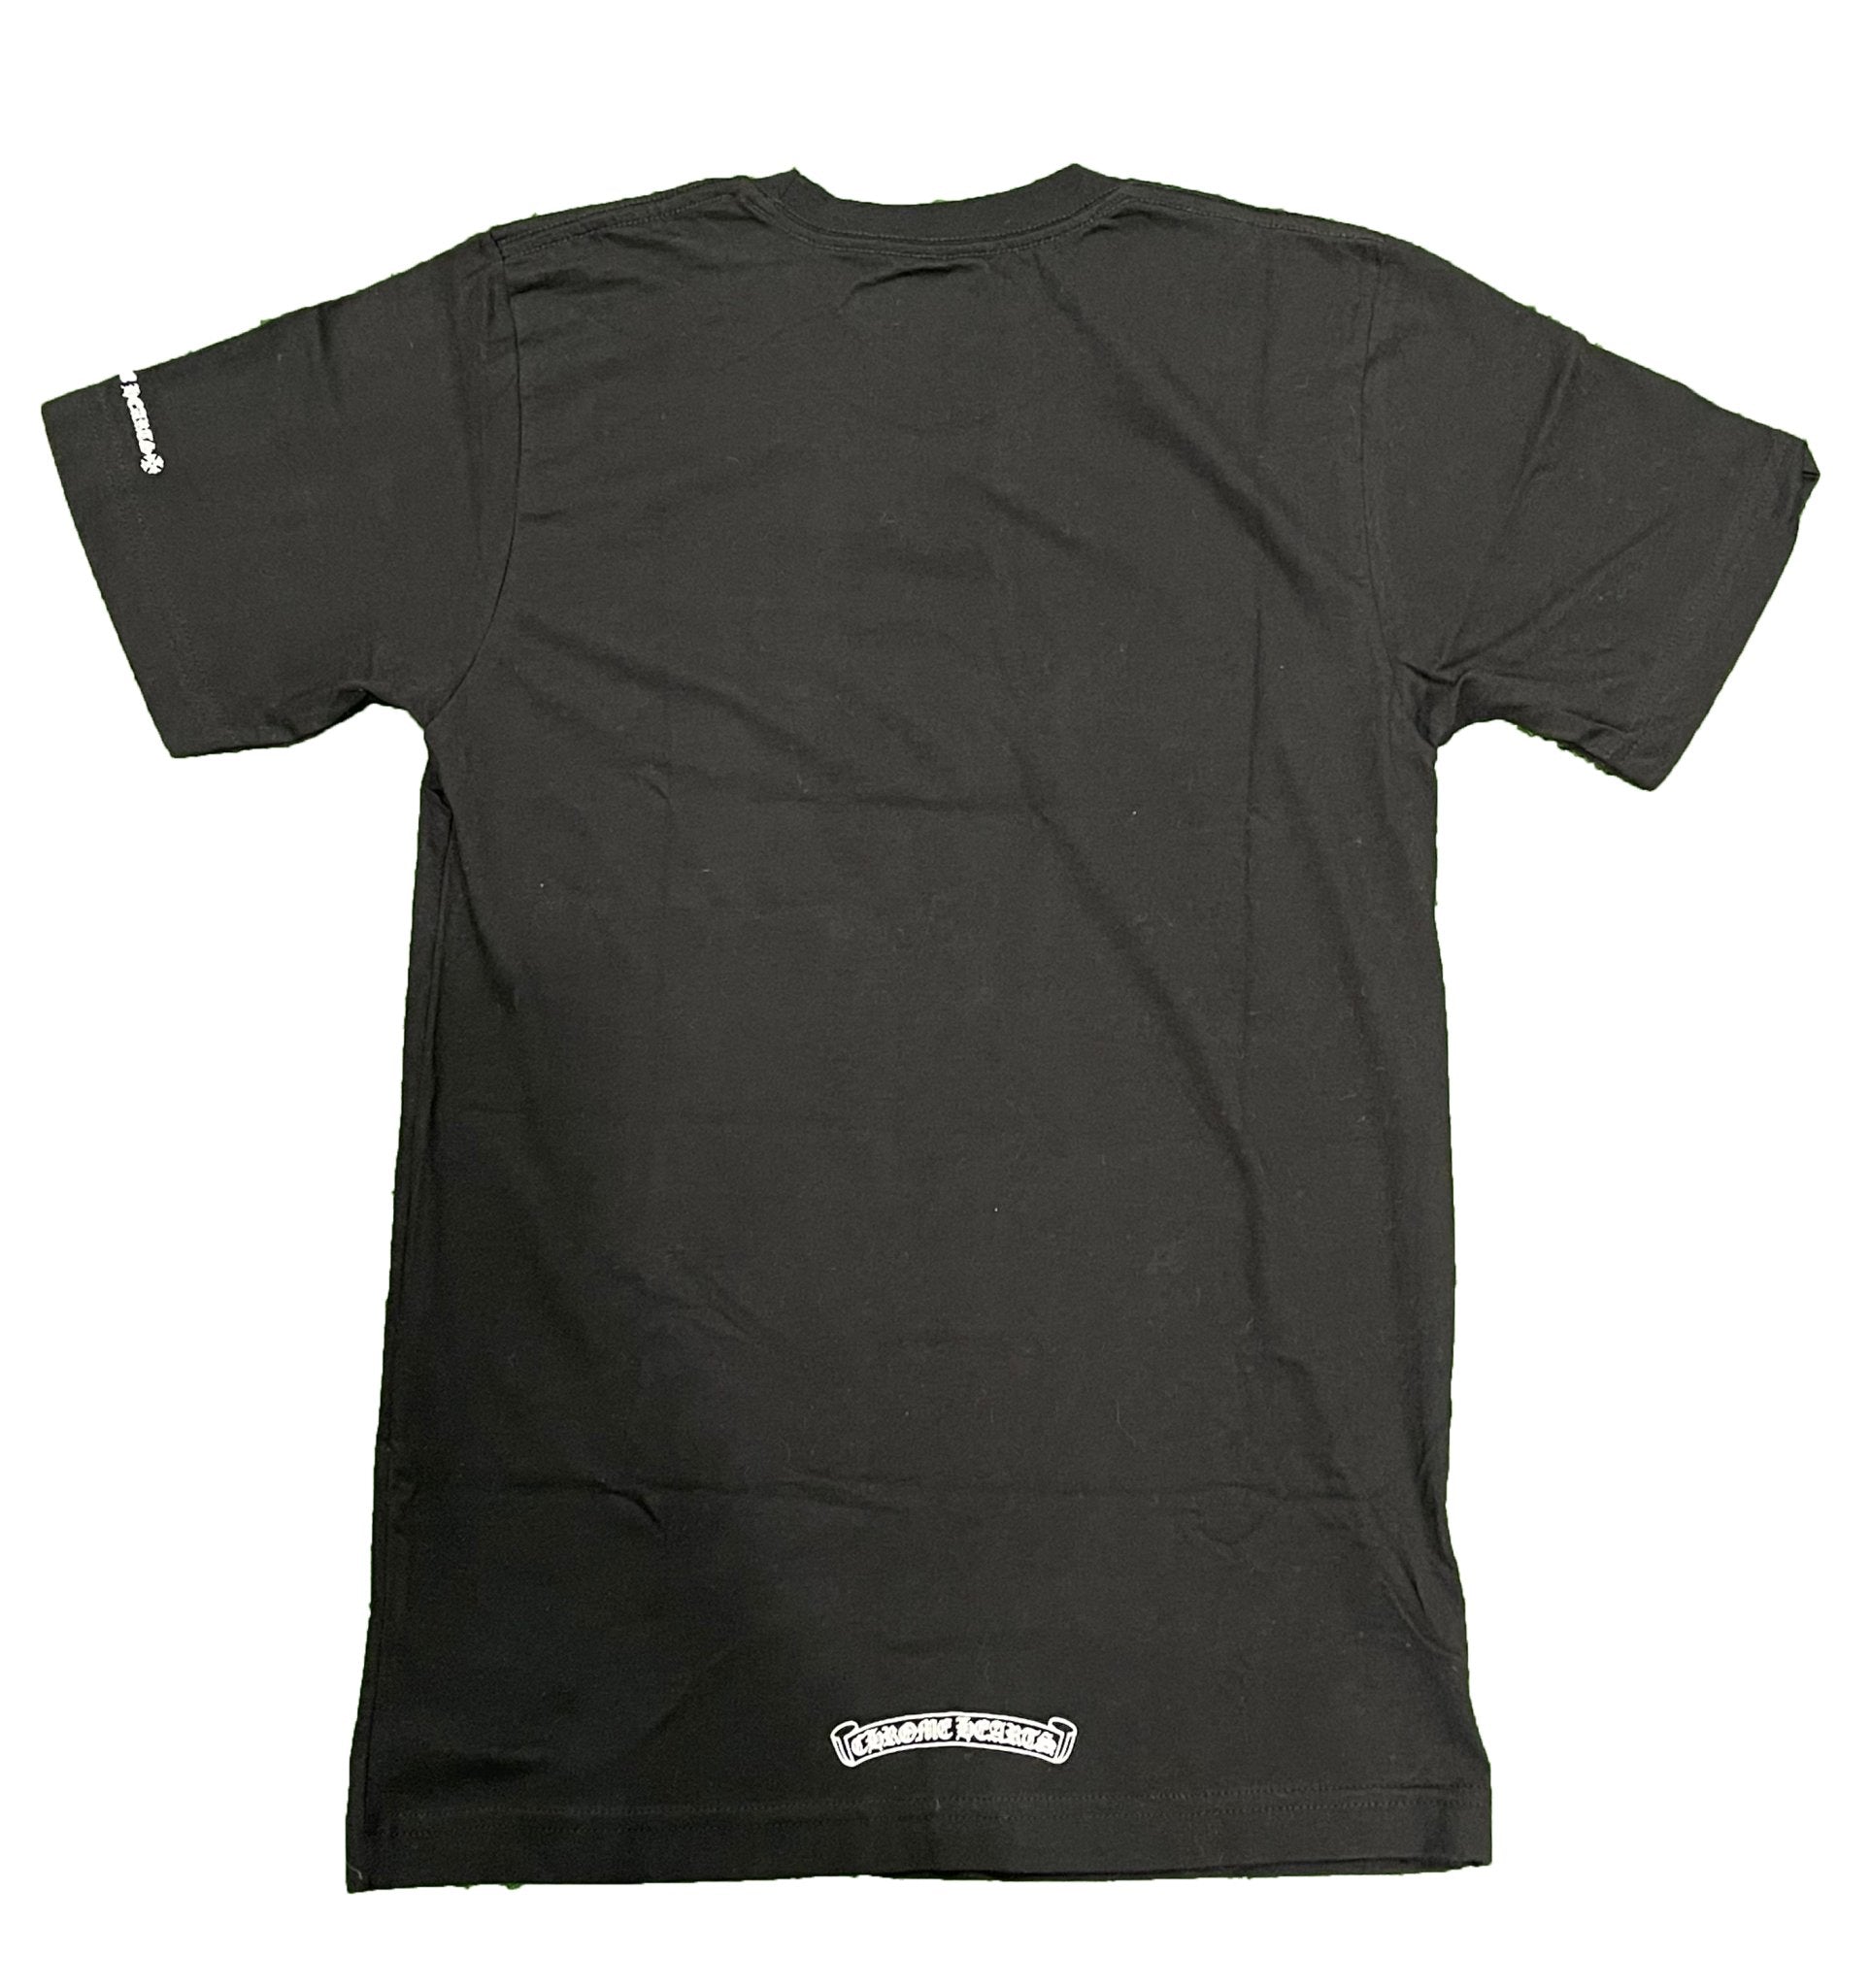 Chrome Hearts Neck Logo S/S T-shirt Black - Paroissesaintefoy Sneakers Sale Online